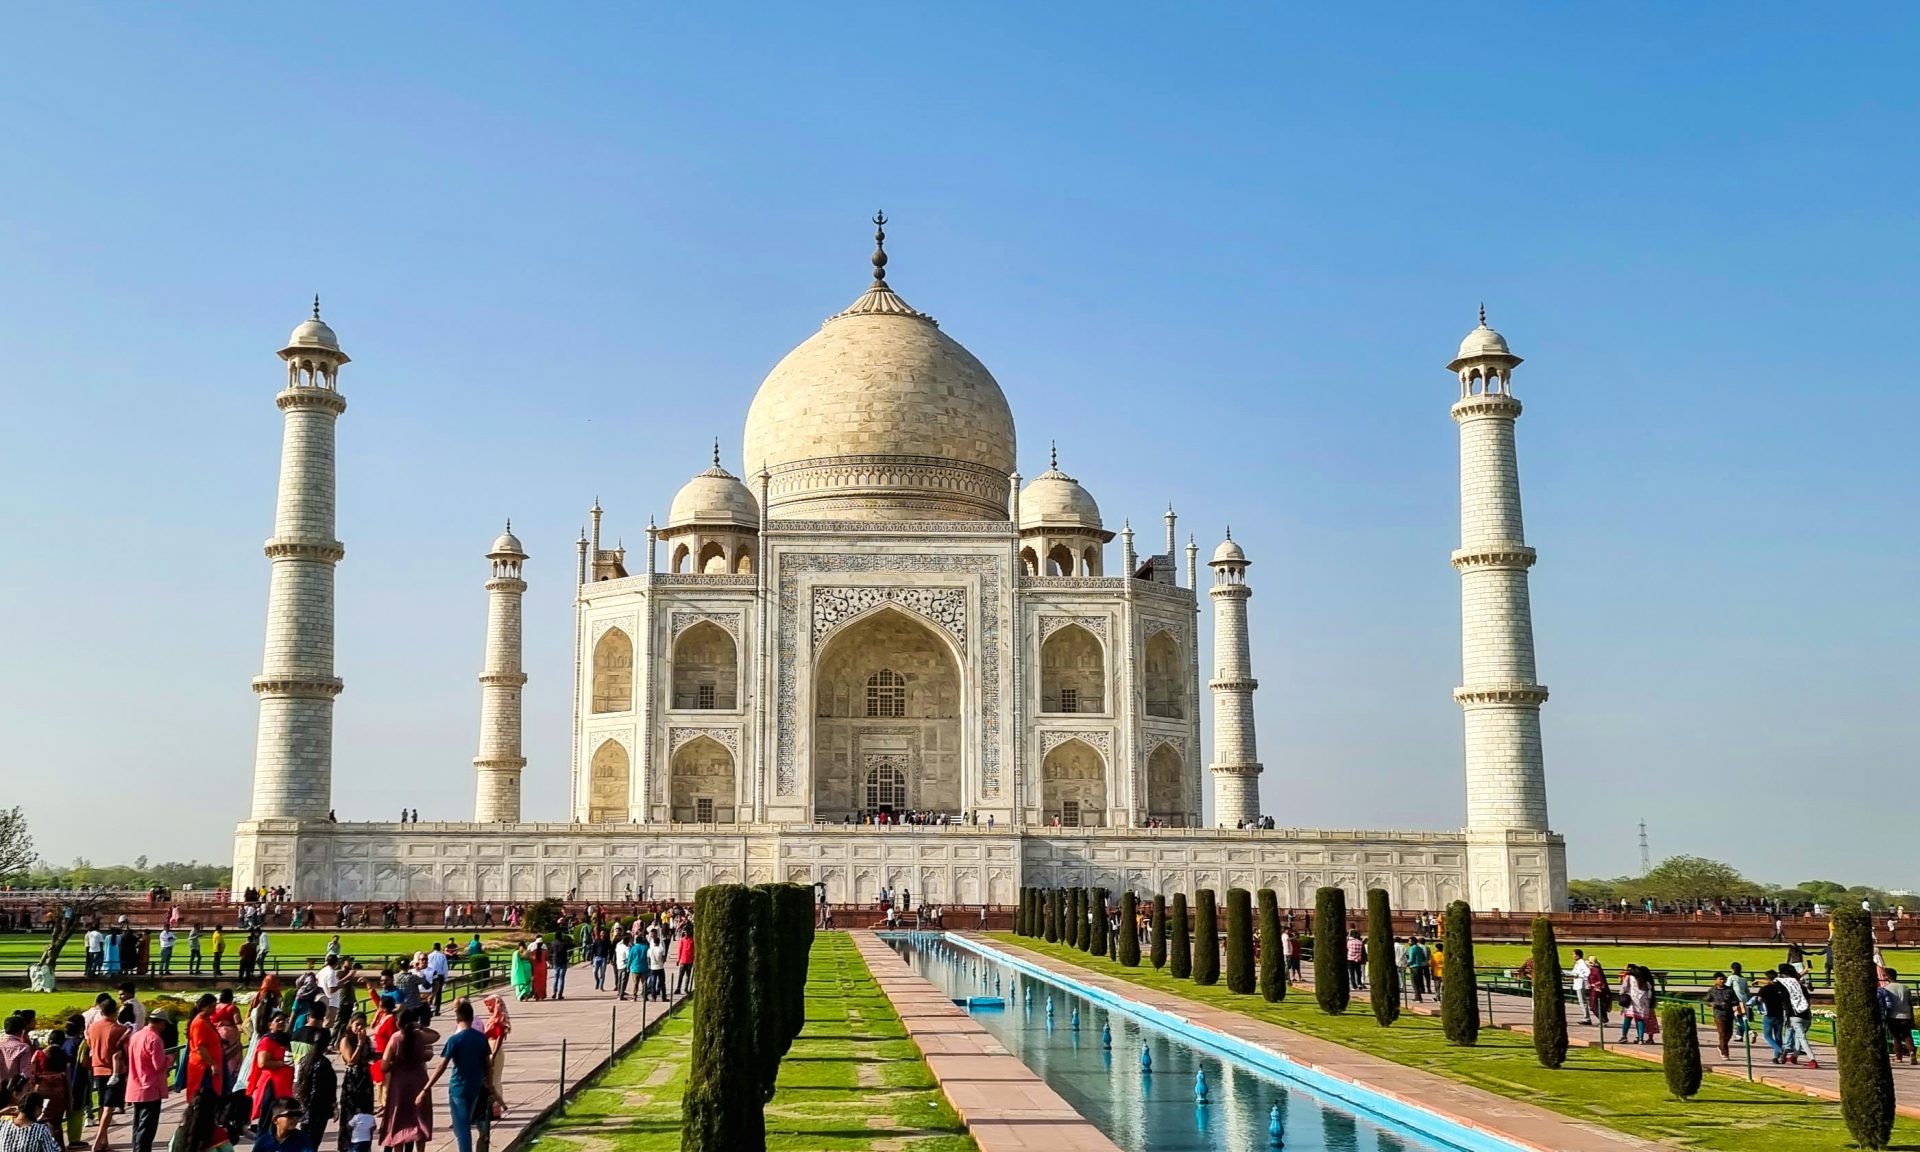 Taj Mahal in India